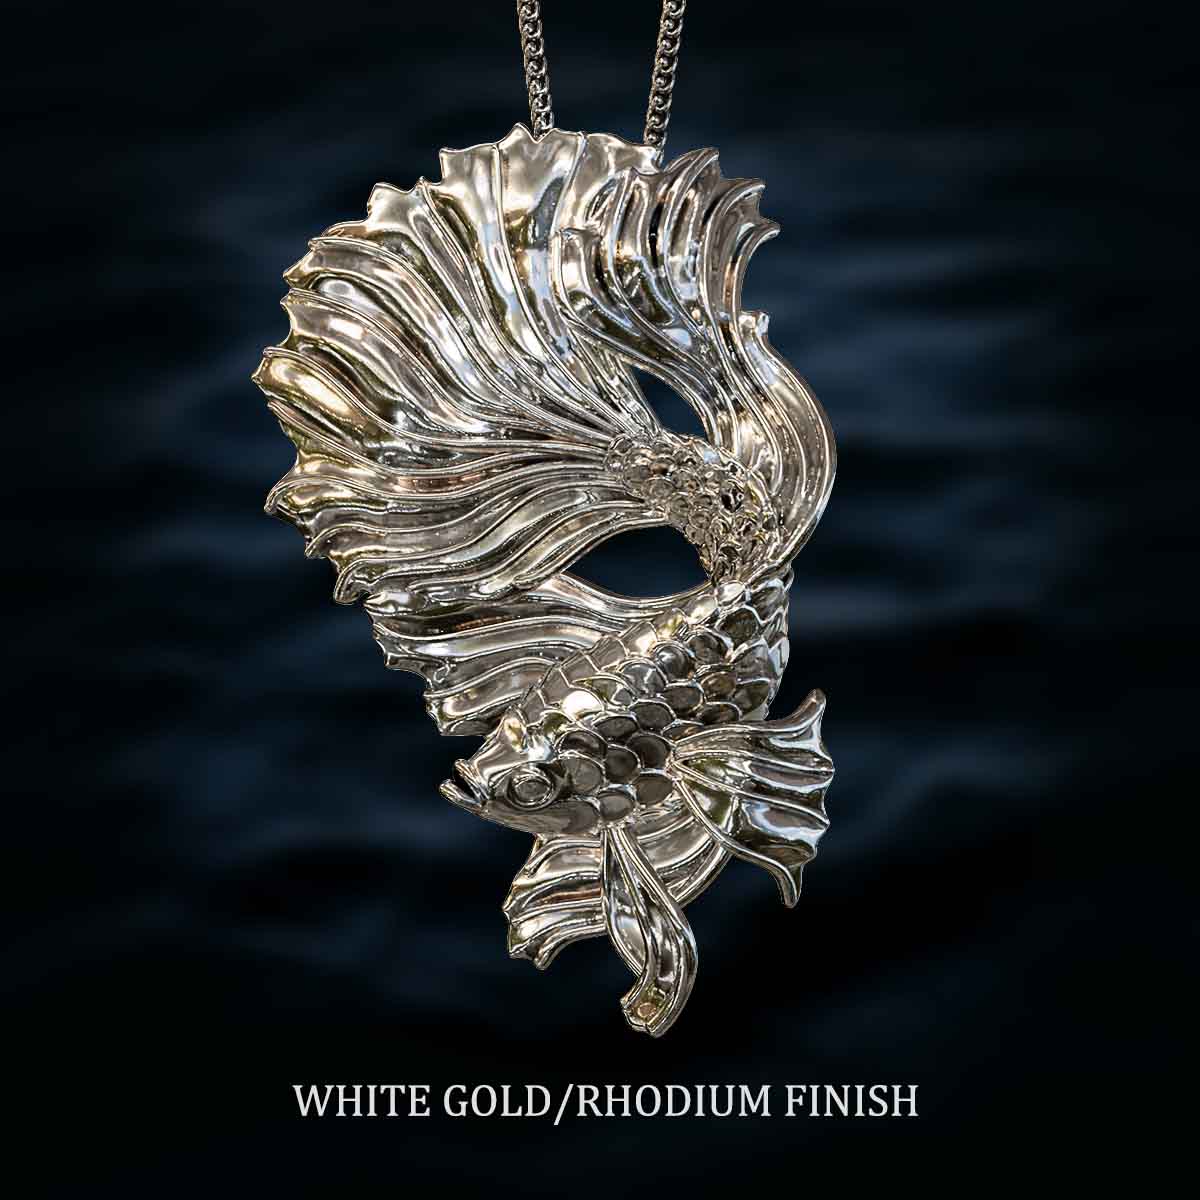 White-Gold-Rhodium-Betta-Fish-Pendant-Jewelry-For-Necklace